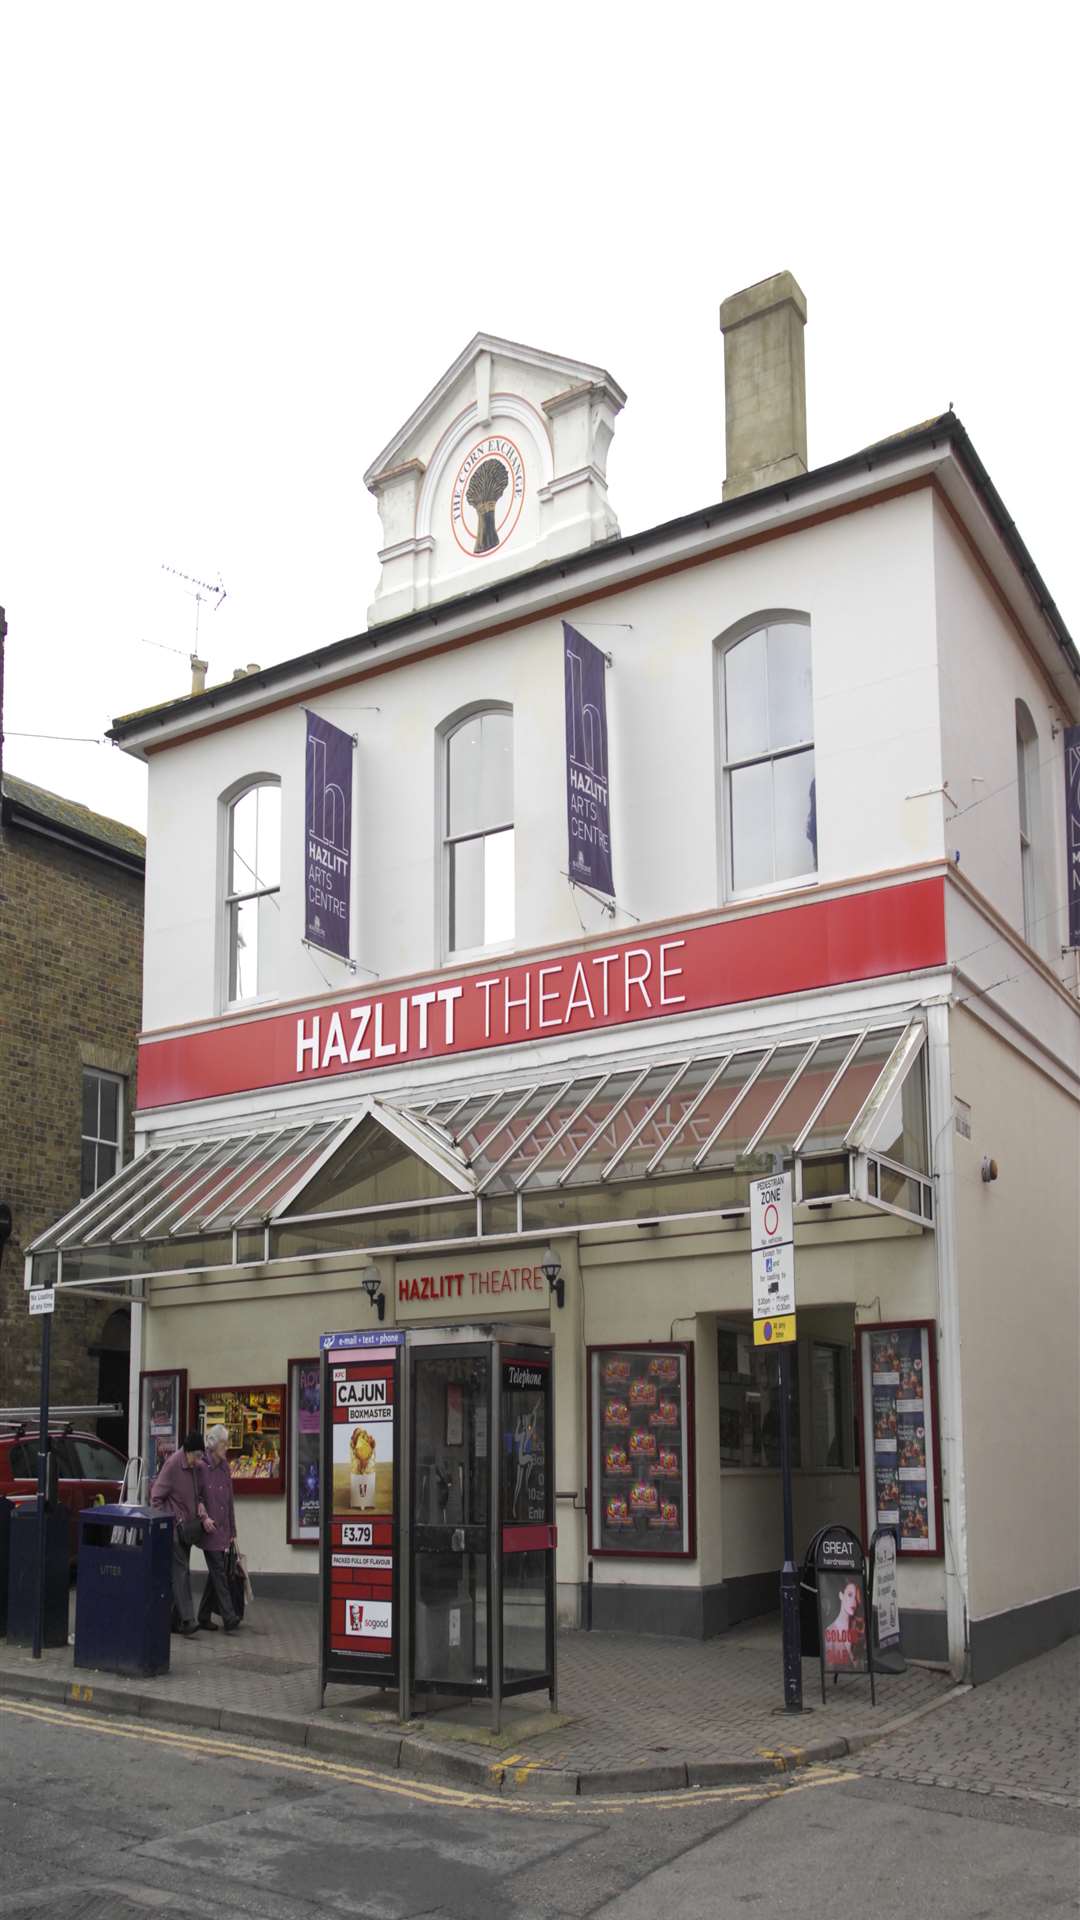 The Hazlitt Theatre